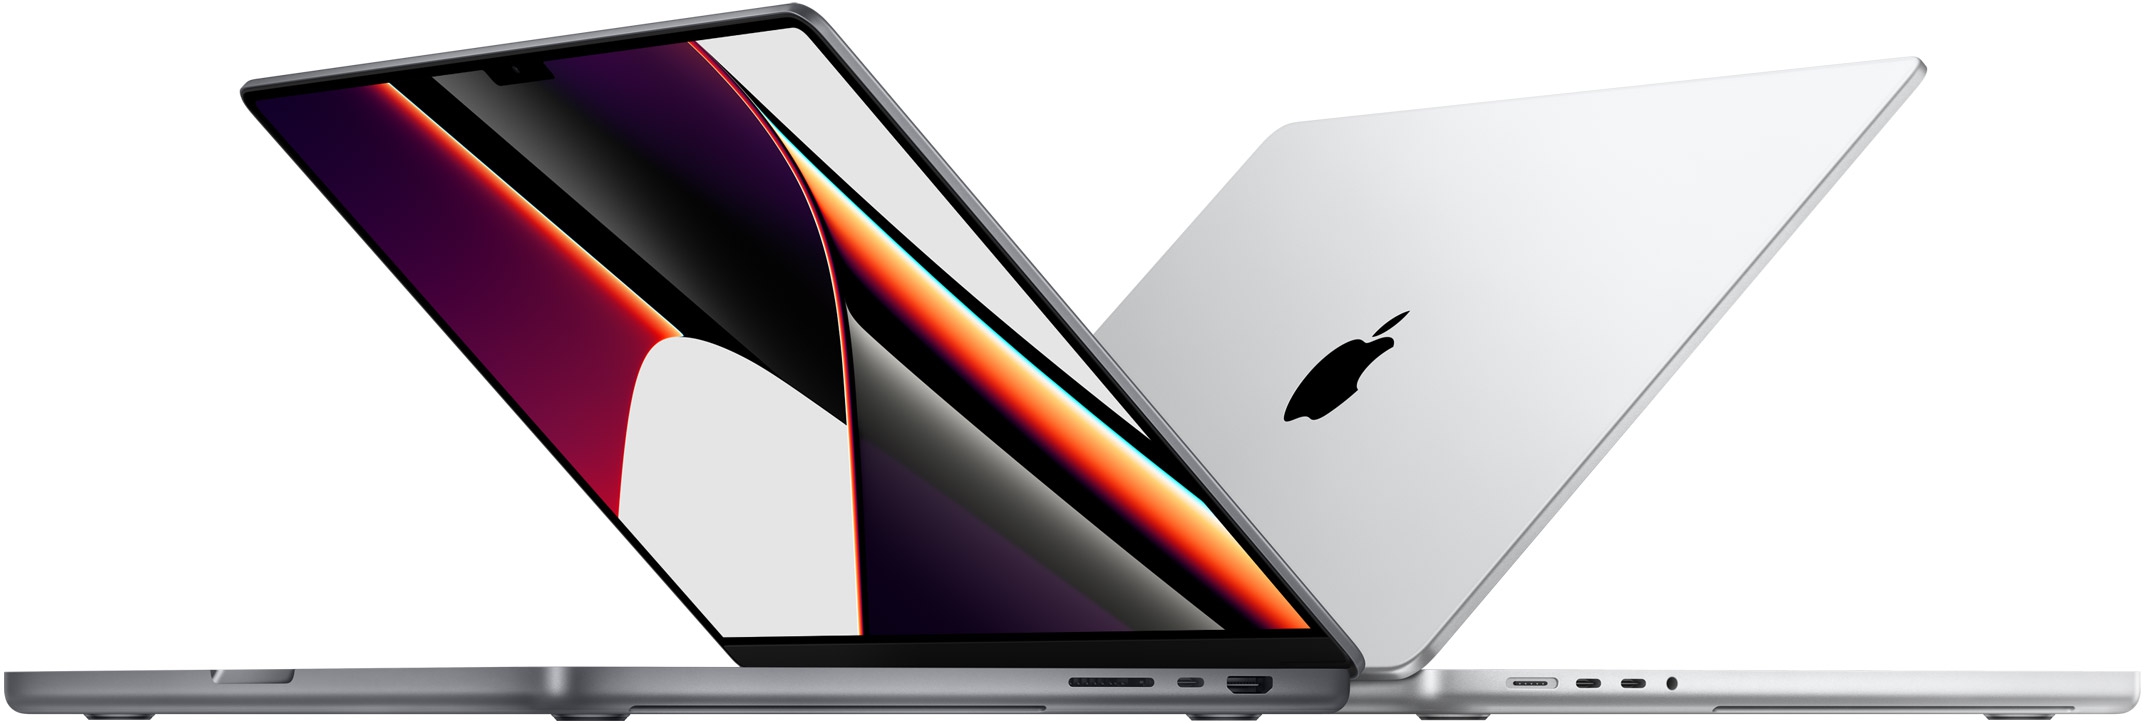 MacBook Pro 14 and 16 inch | מקבוק פרו 14 ו- 16 אינץ׳